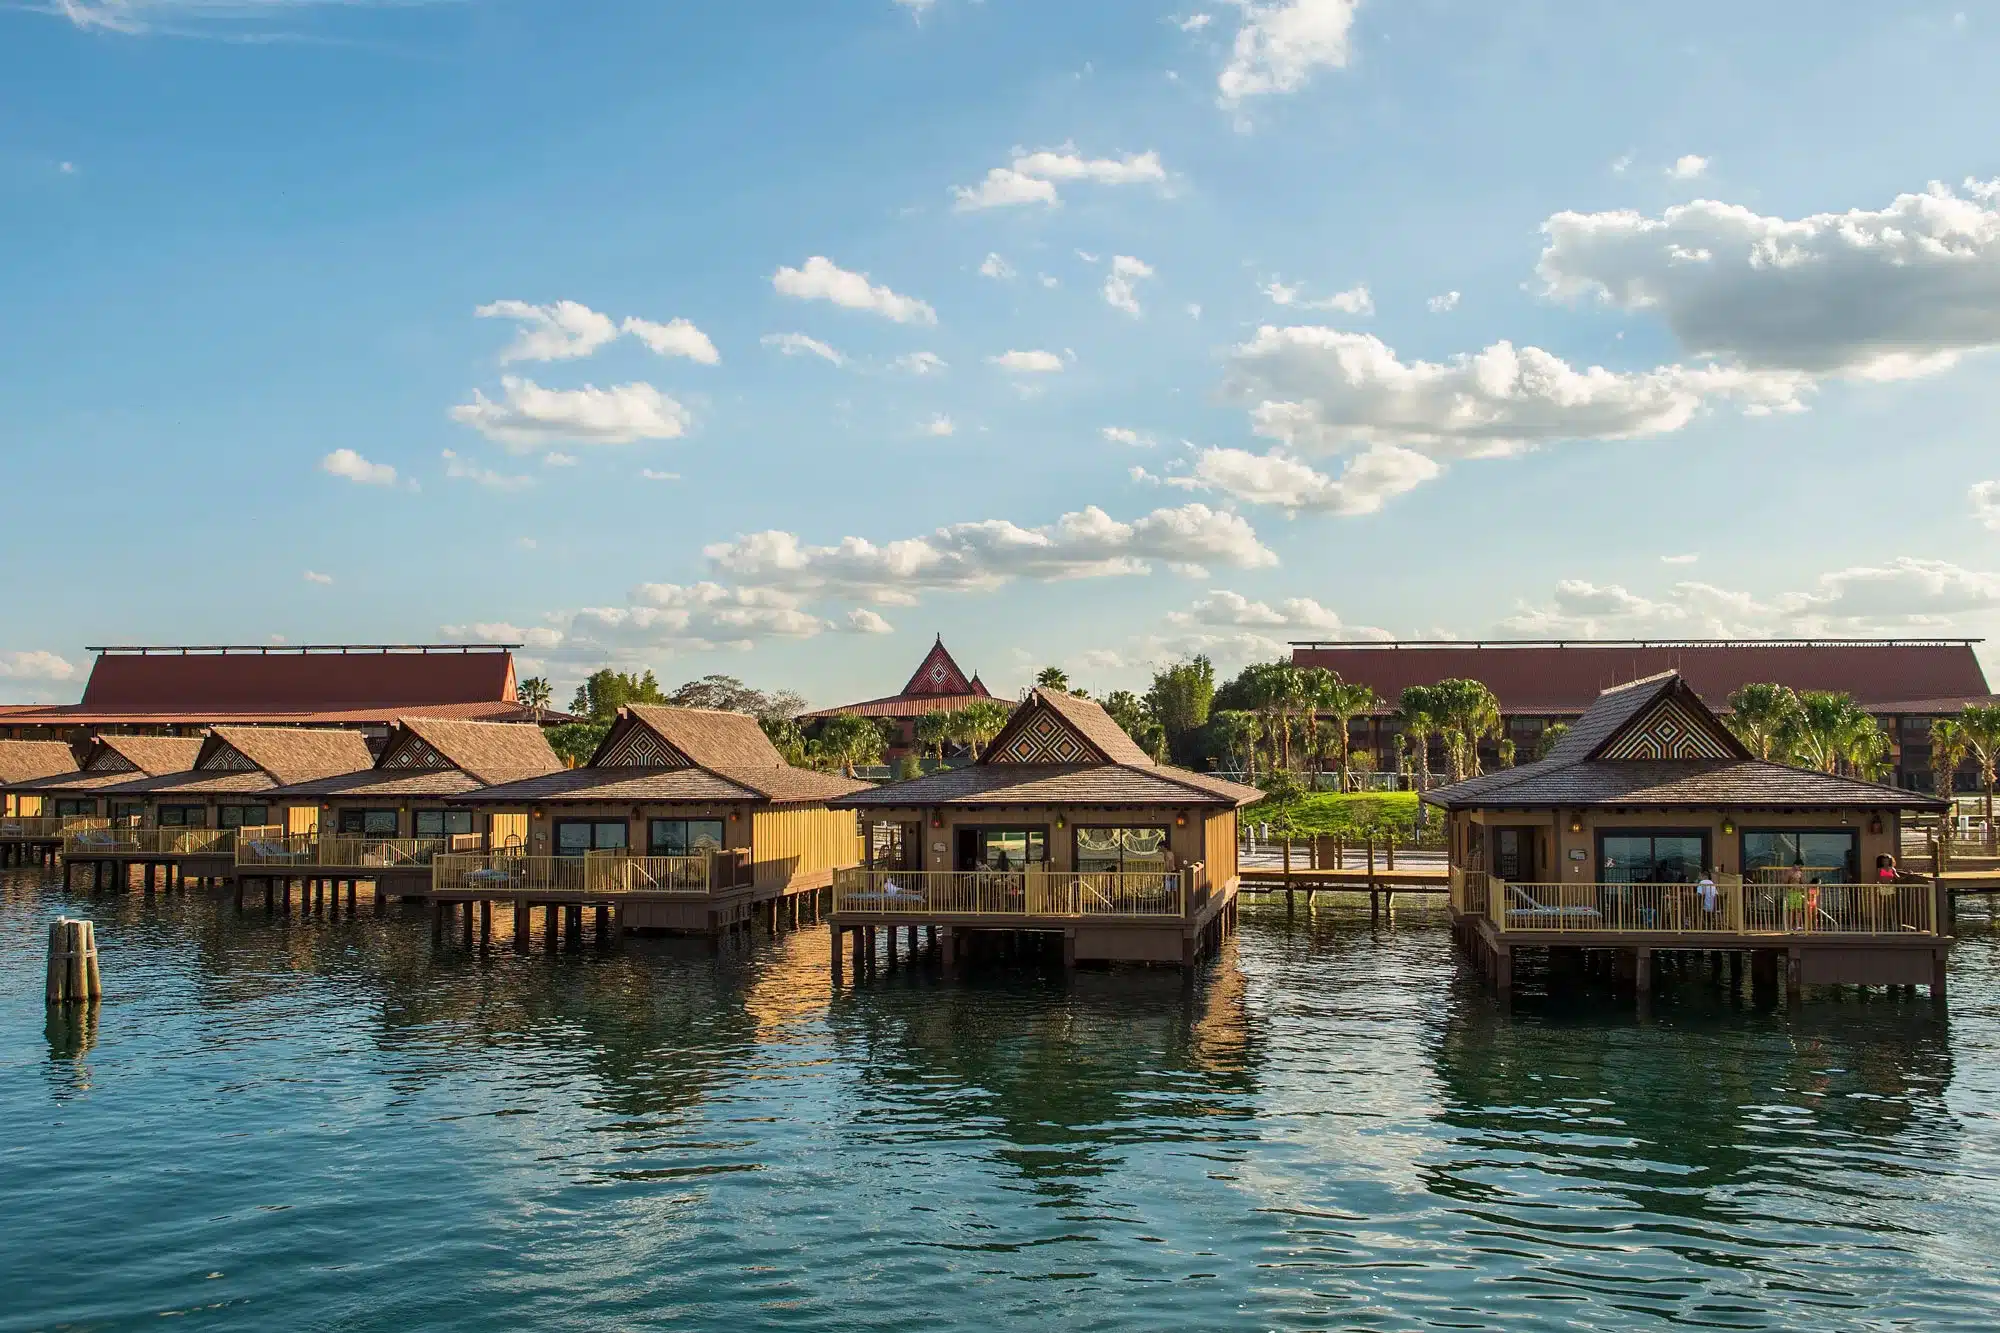 The Bungalows at Disney's Polynesian Village Resort